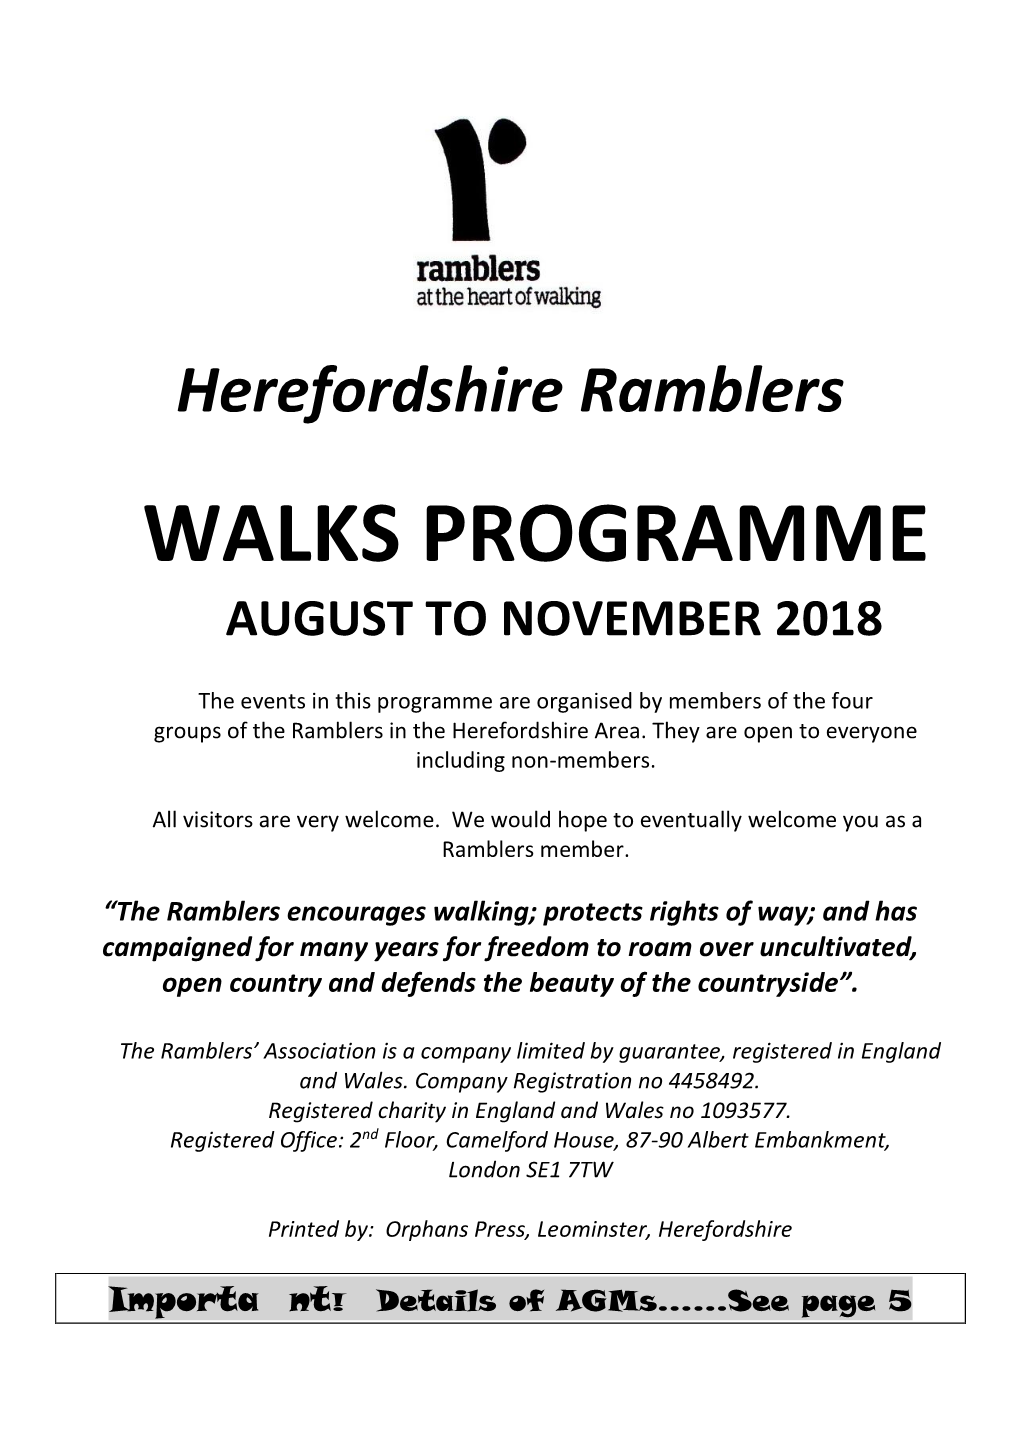 Walks Programme August to November 2018